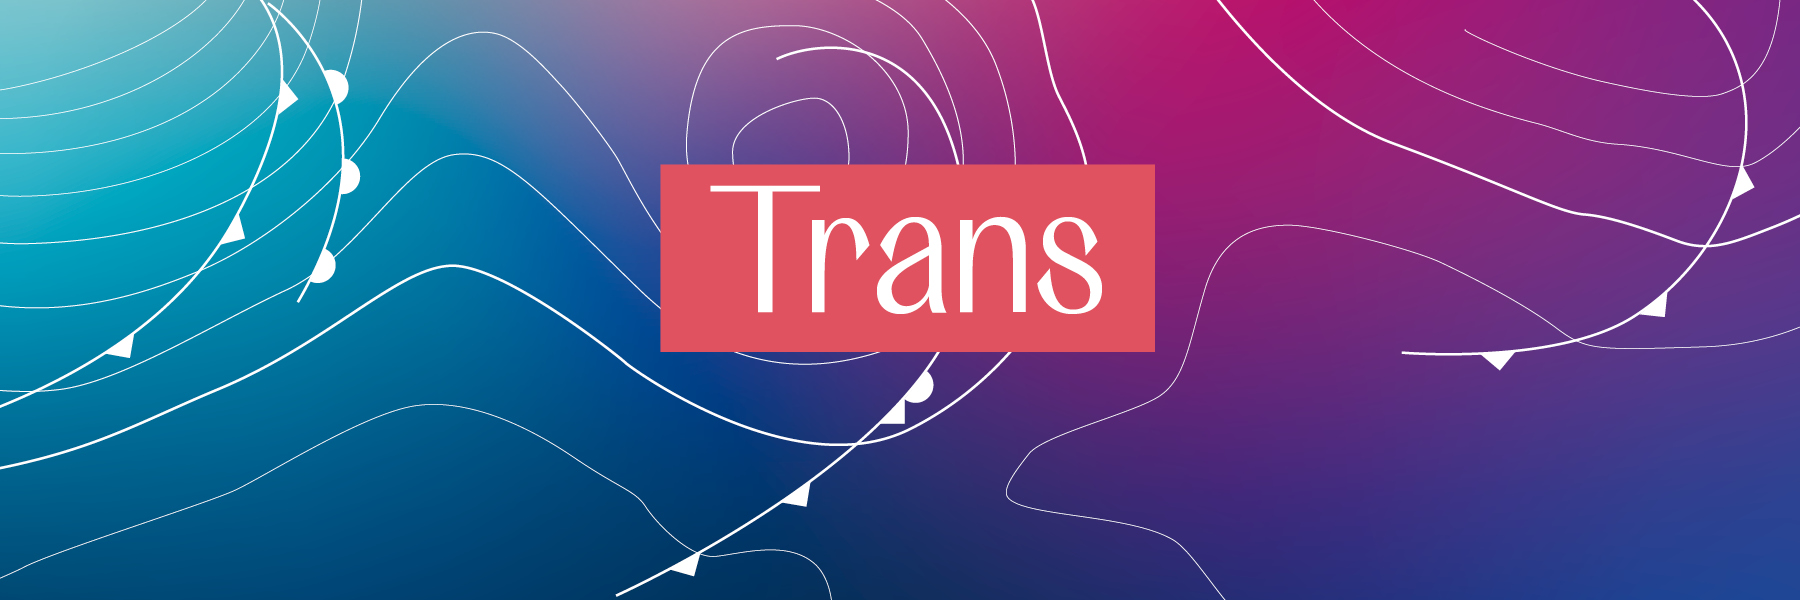 FES Gender Glossar - Trans